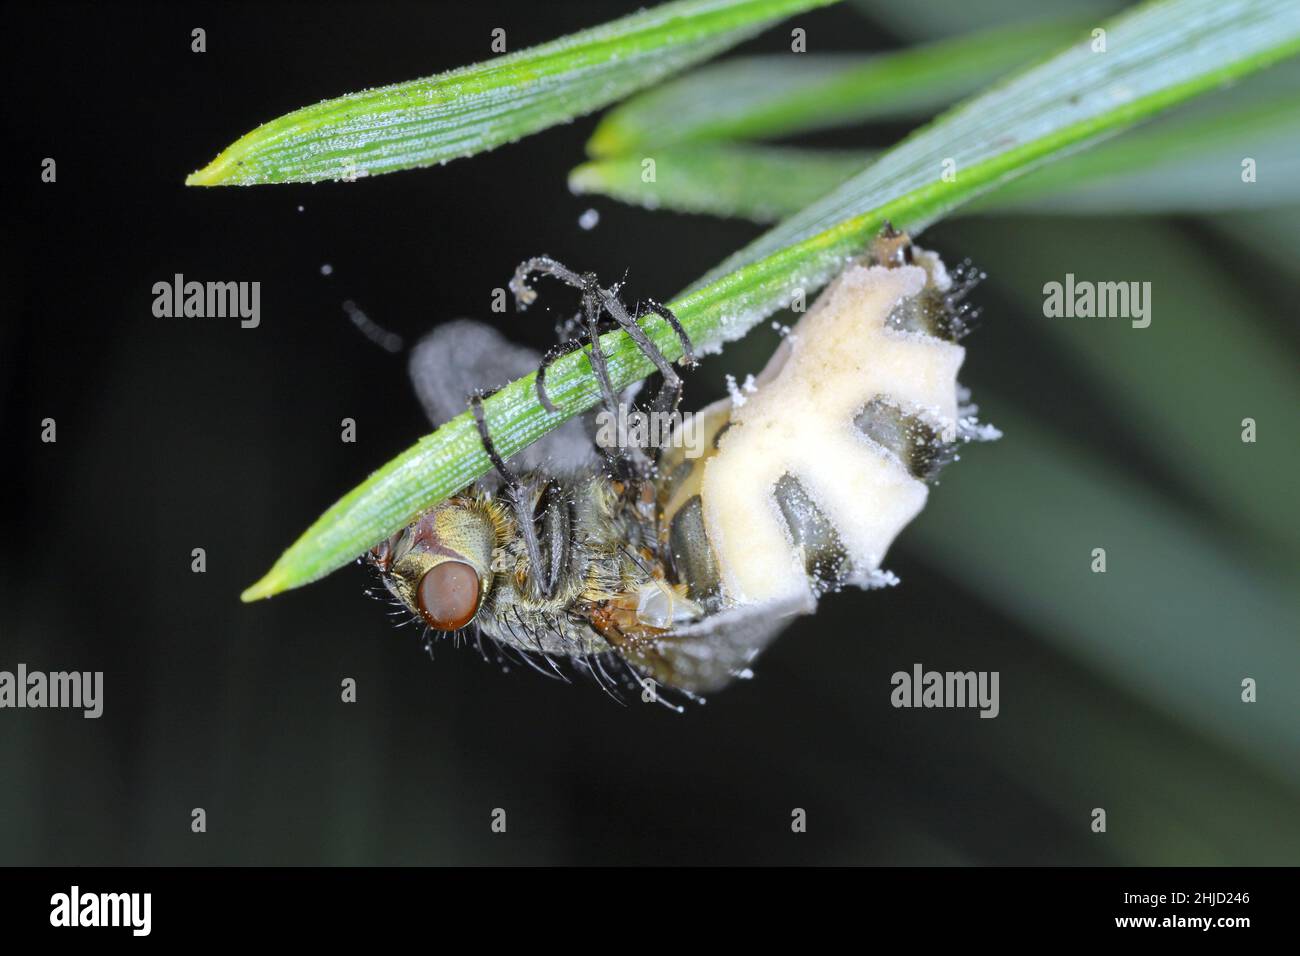 Fly kiled by parasitic fungus - Entomophthora muscae. Stock Photo